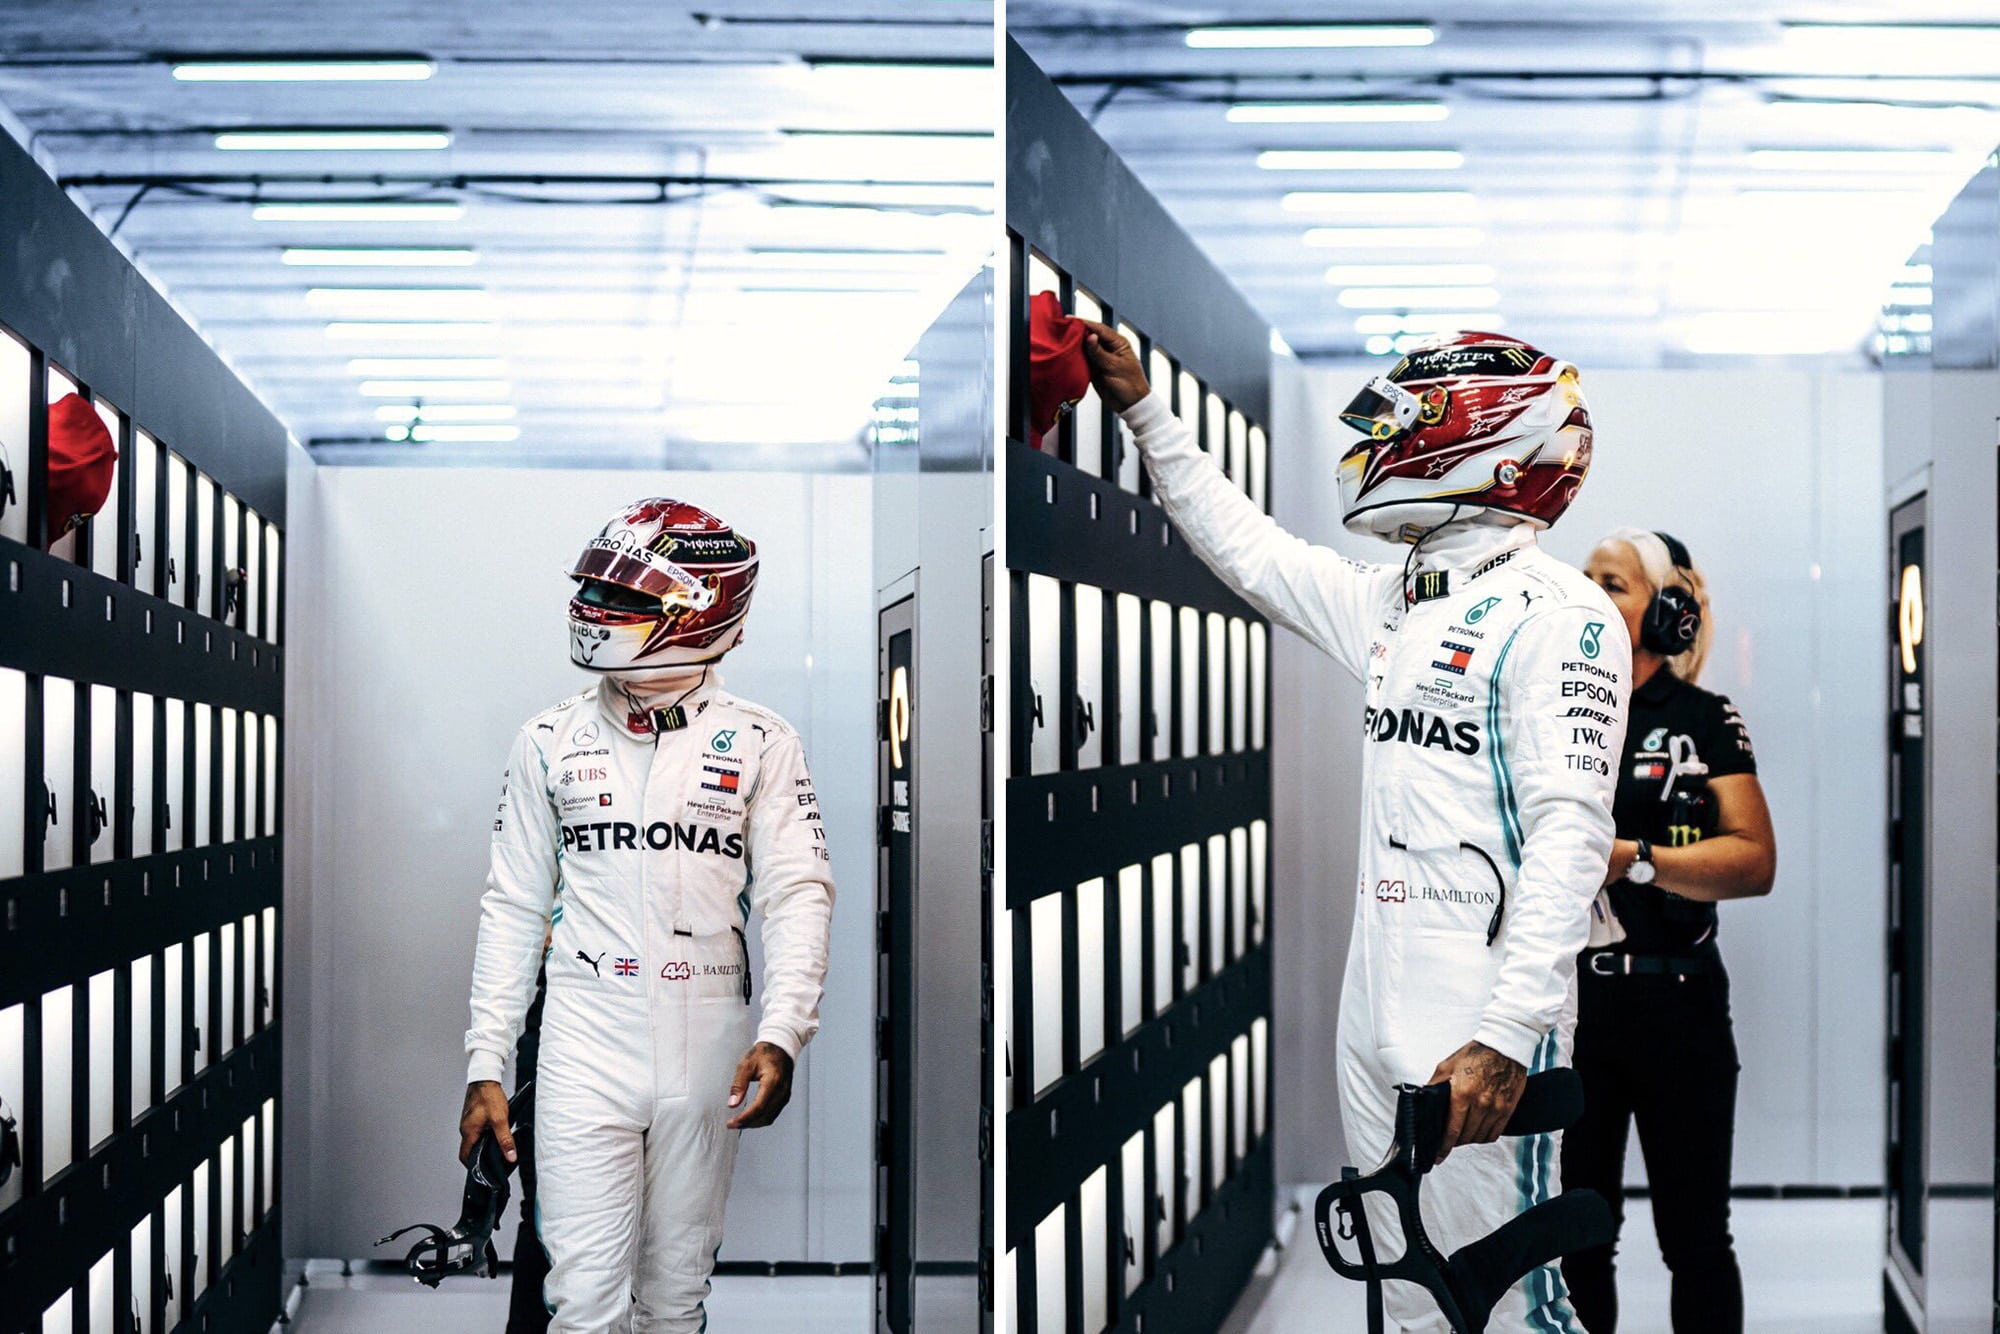 Lewis Hamilton pays tribute to Niki Lauda as he passes his red cap